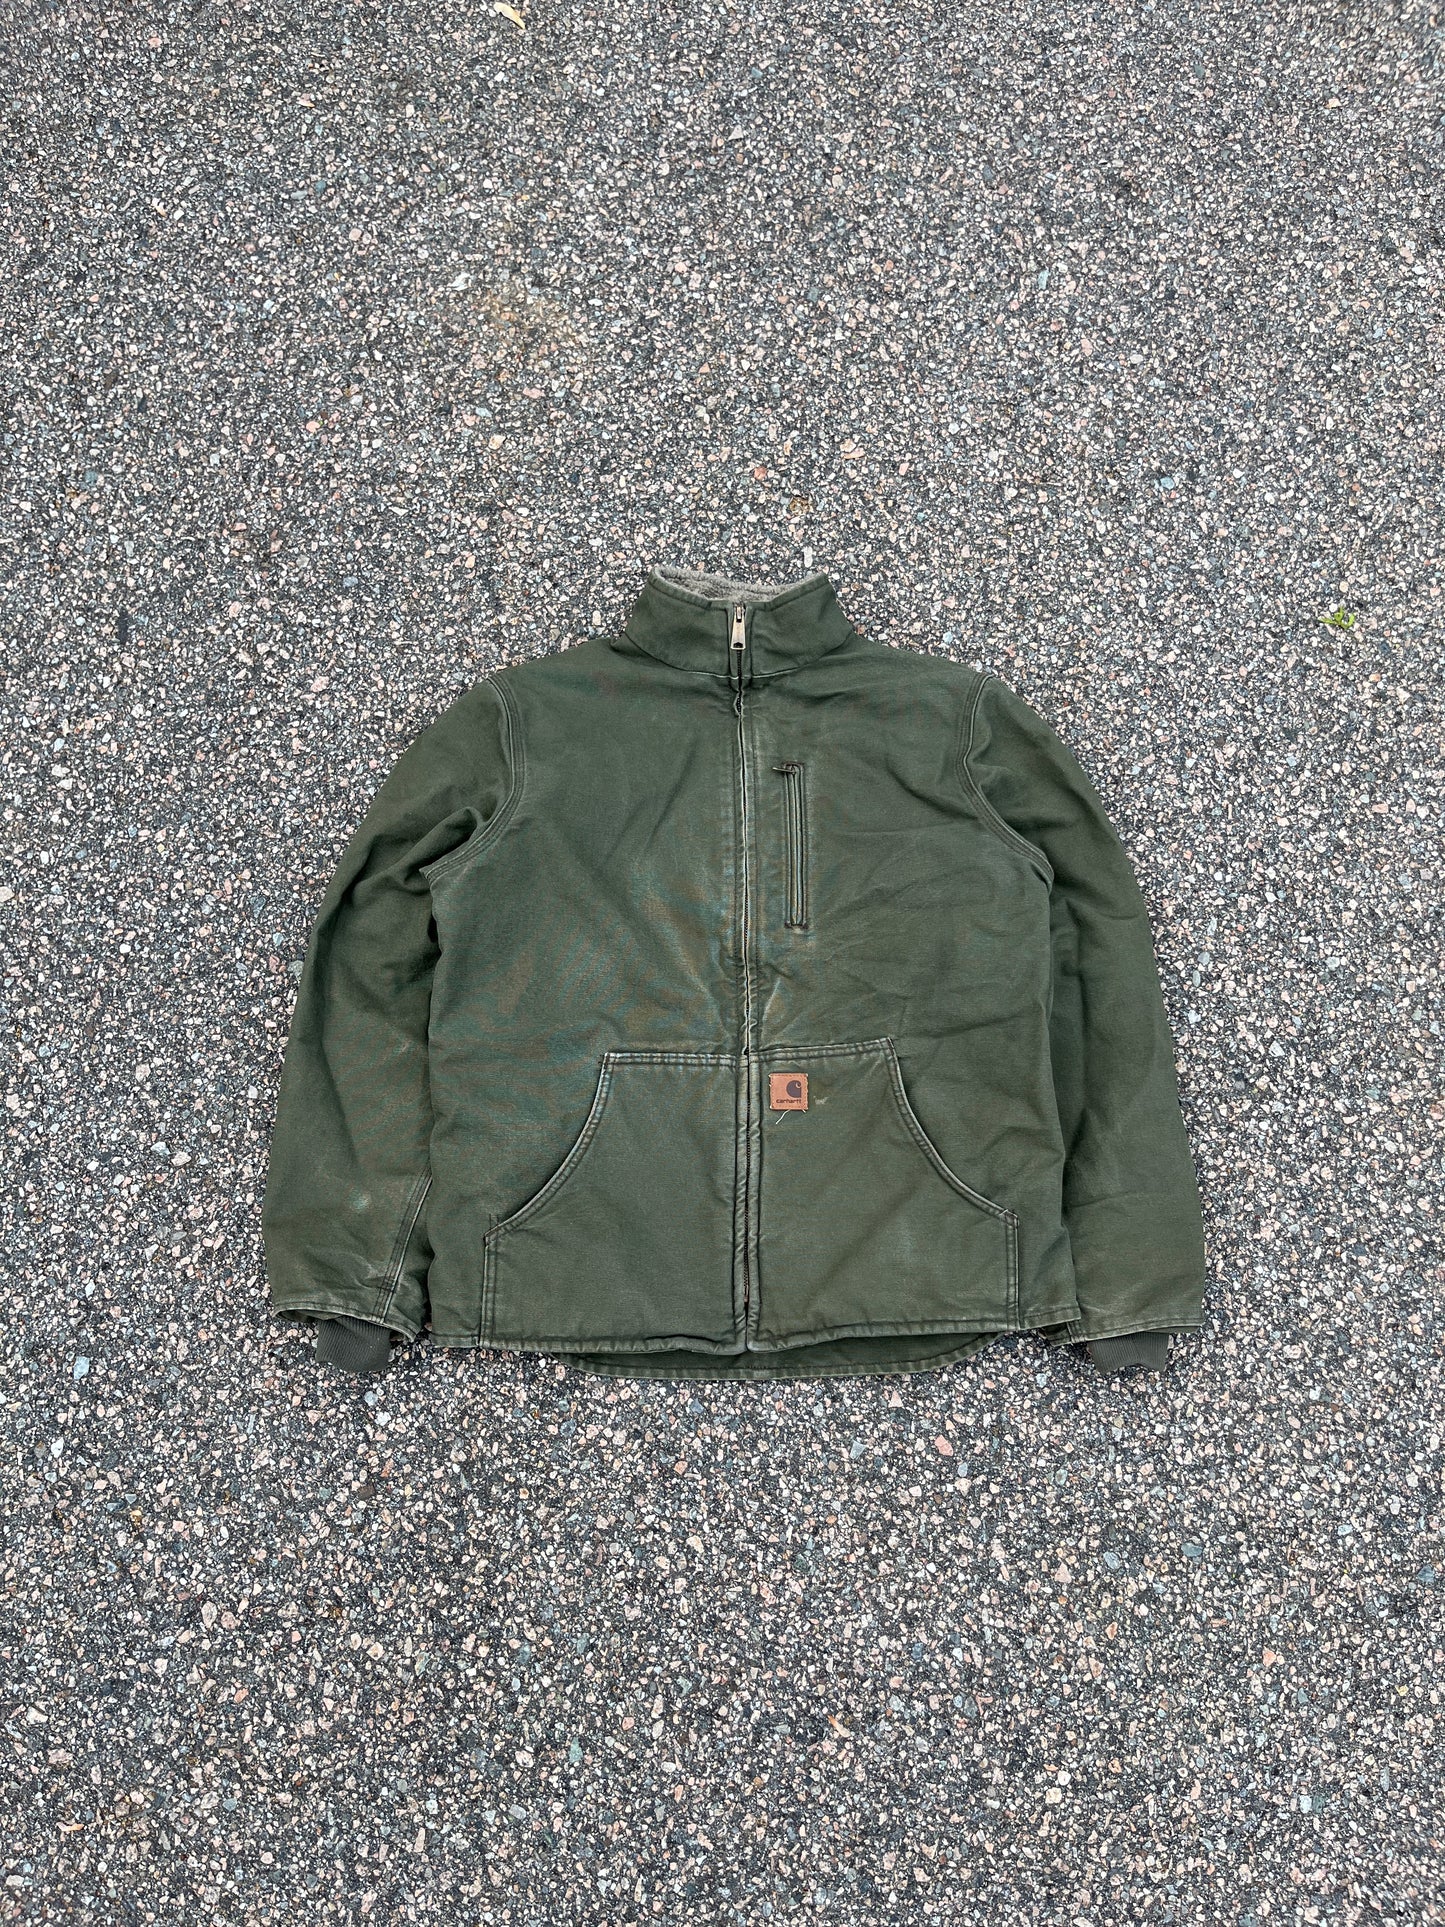 Faded Green Carhartt Sherpa Lined Jacket - Medium